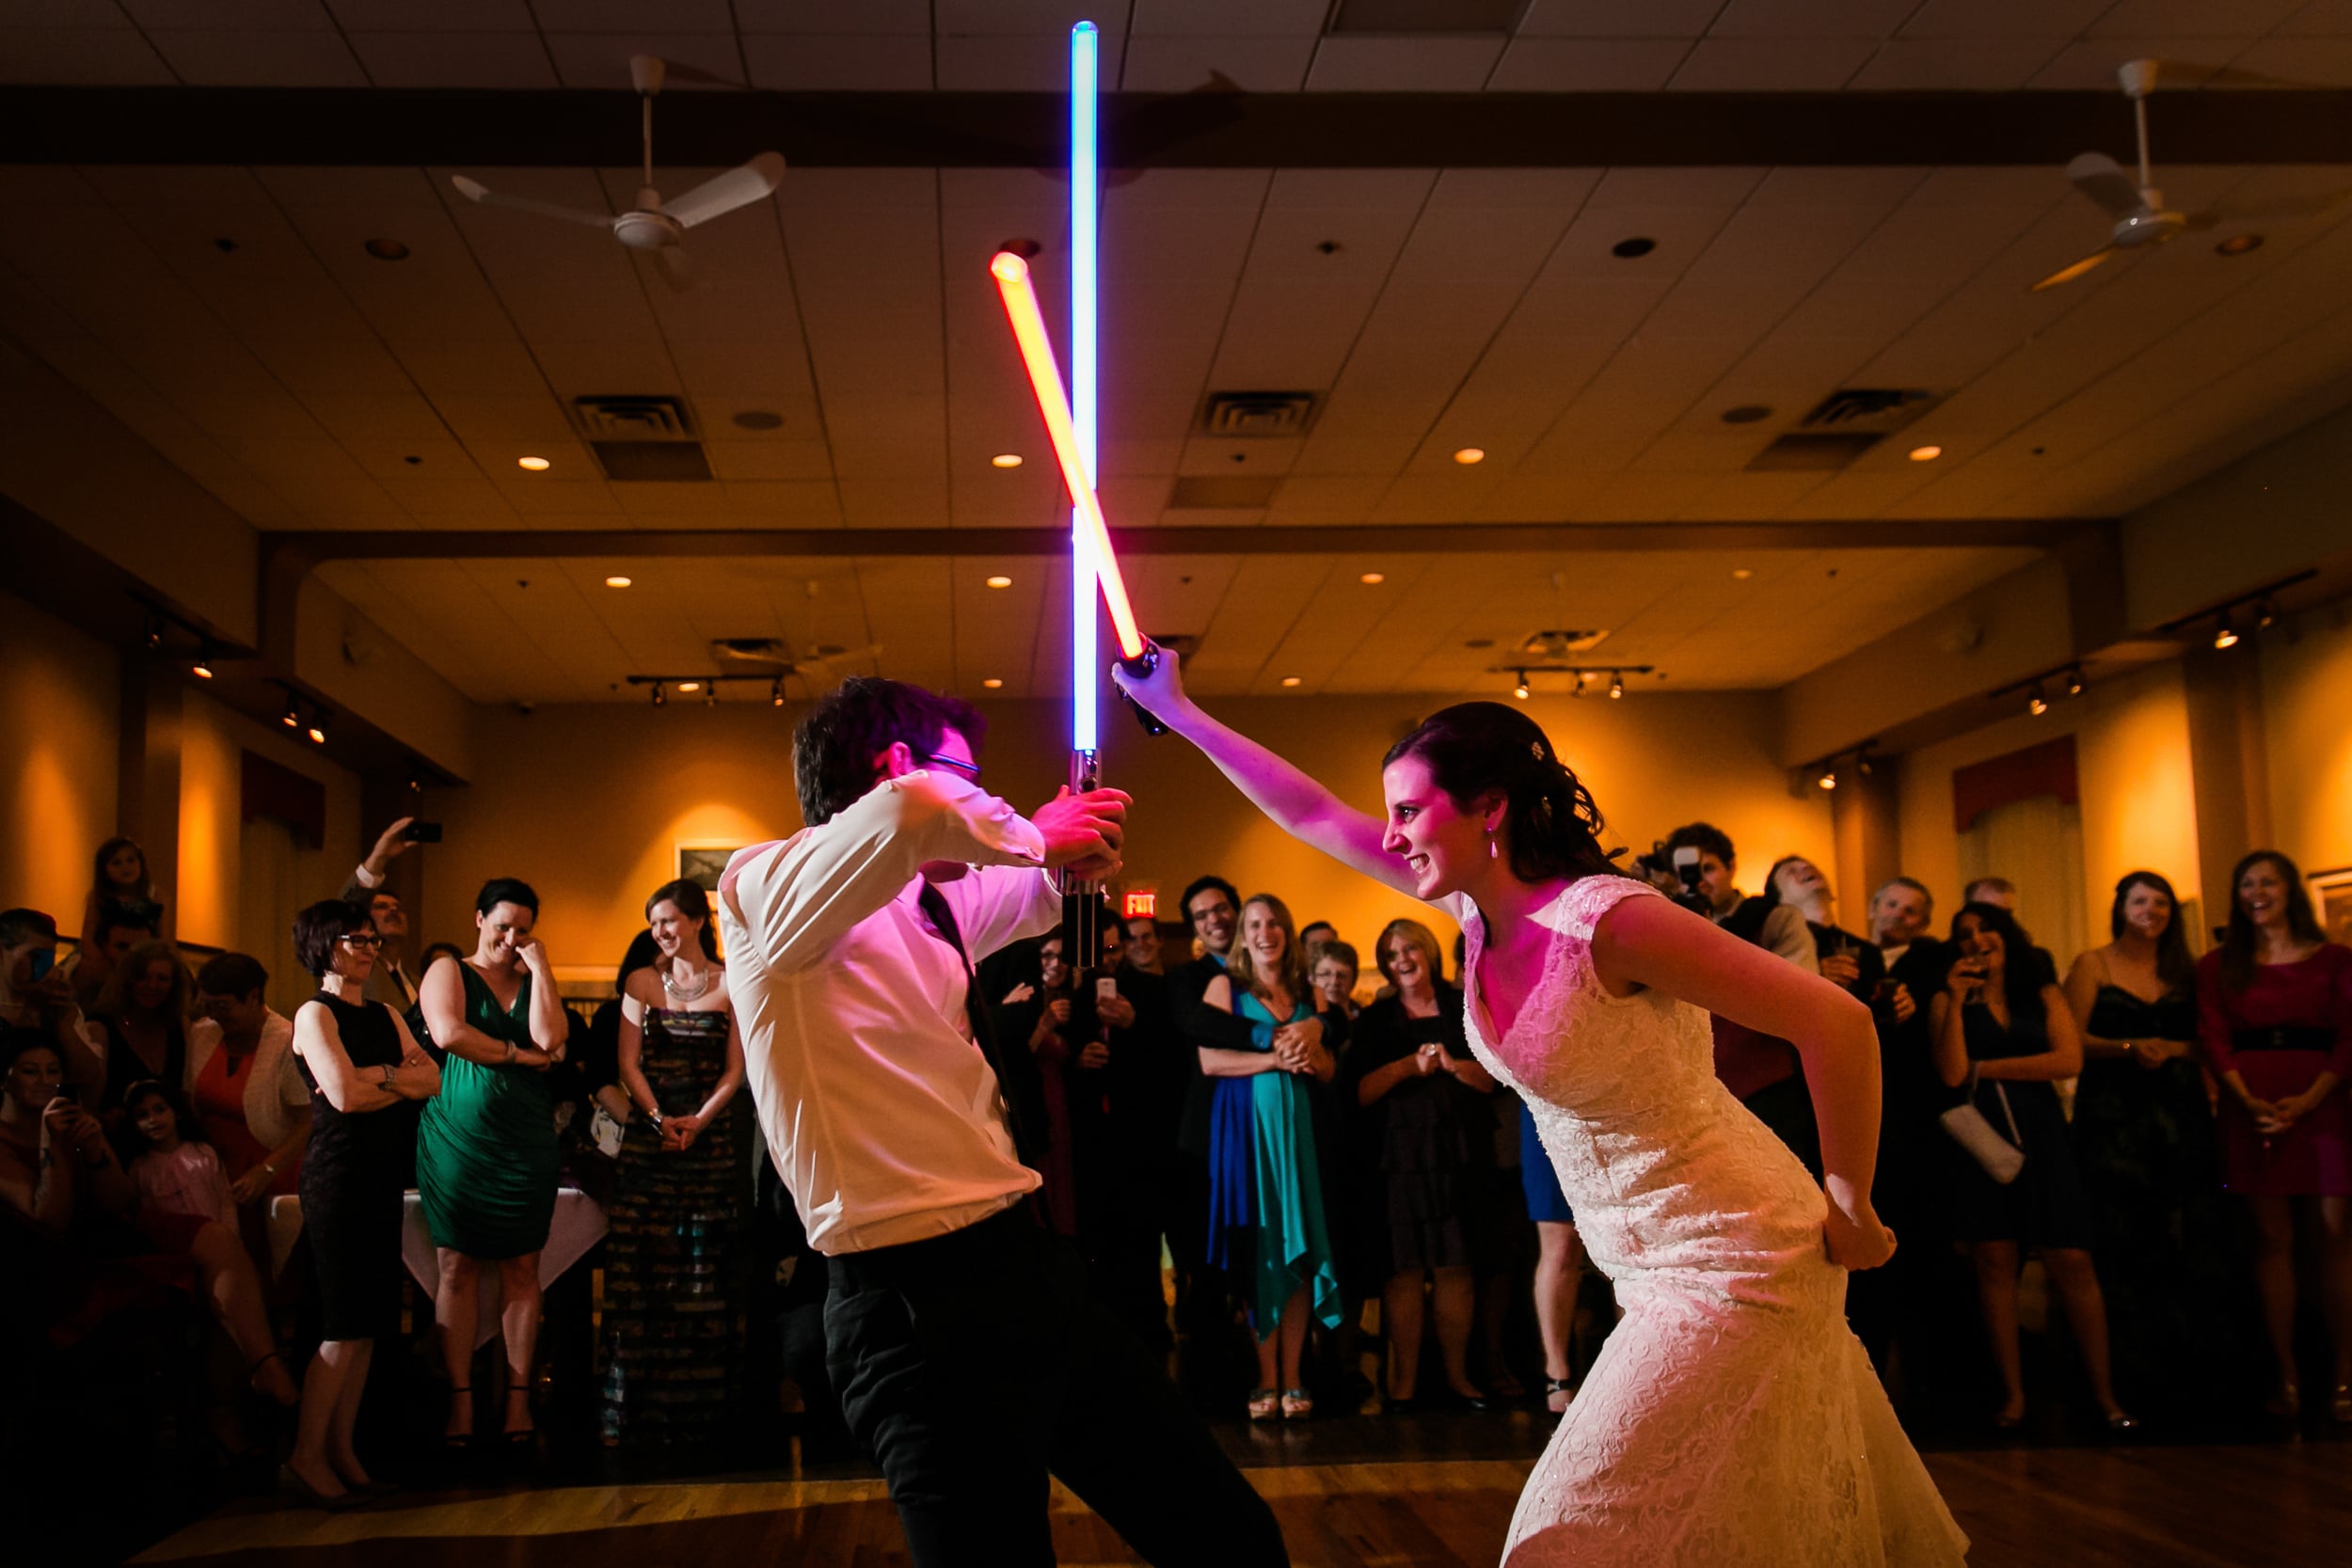 star wars lightsaber battle at a wedding reception (Copy)